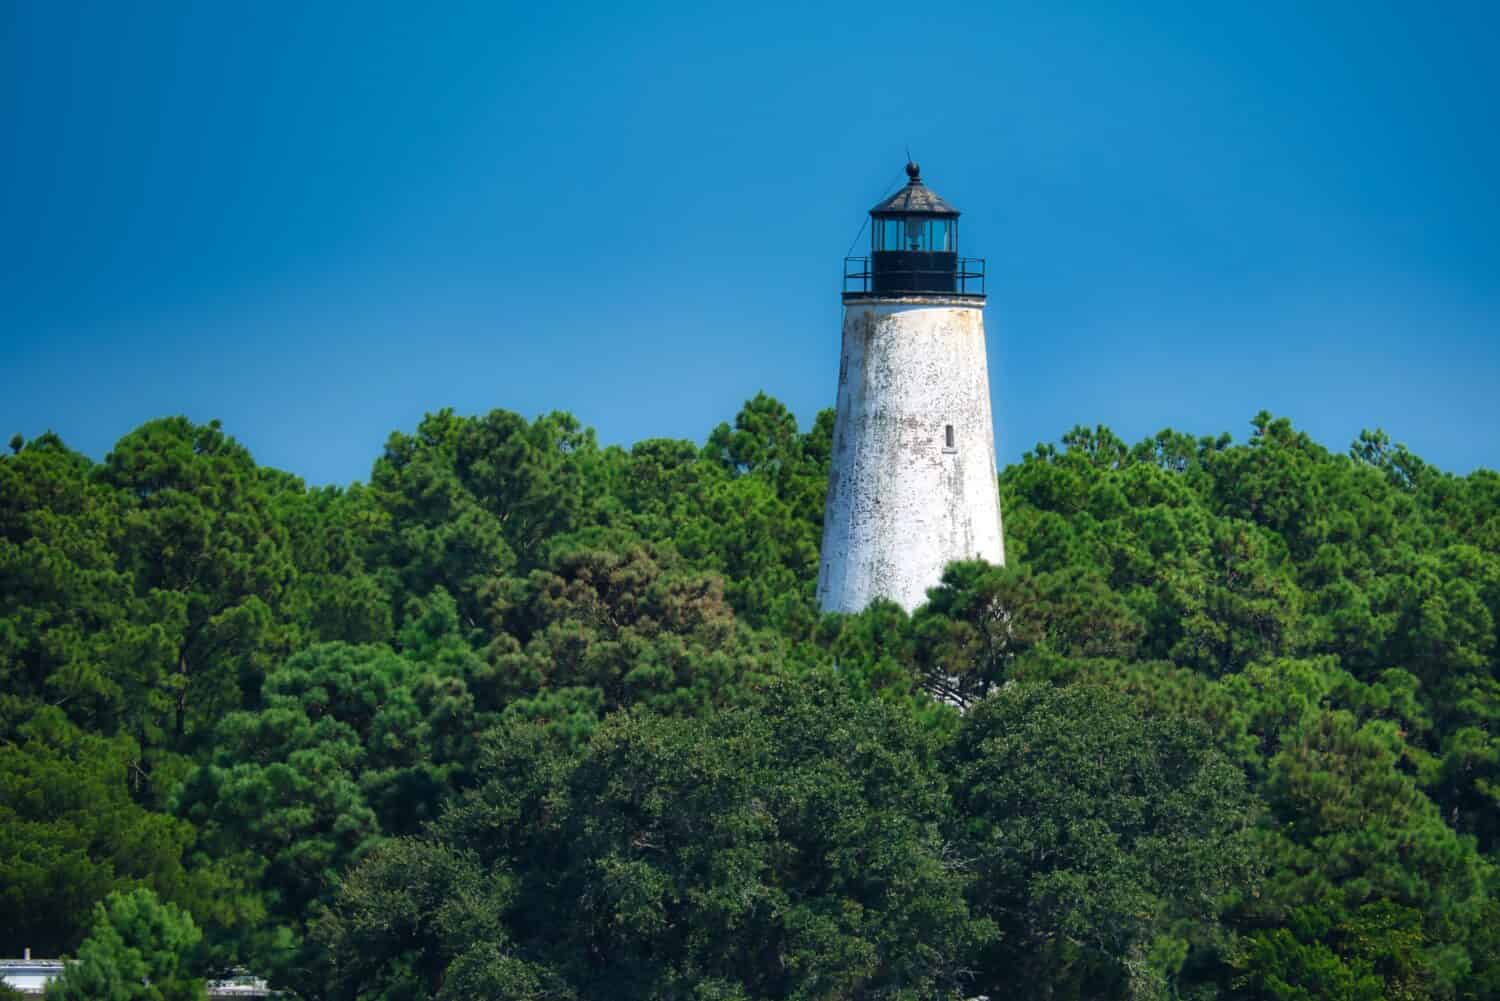 A historic lighthouse on North Island near Georgetown, South Carolina, USA.